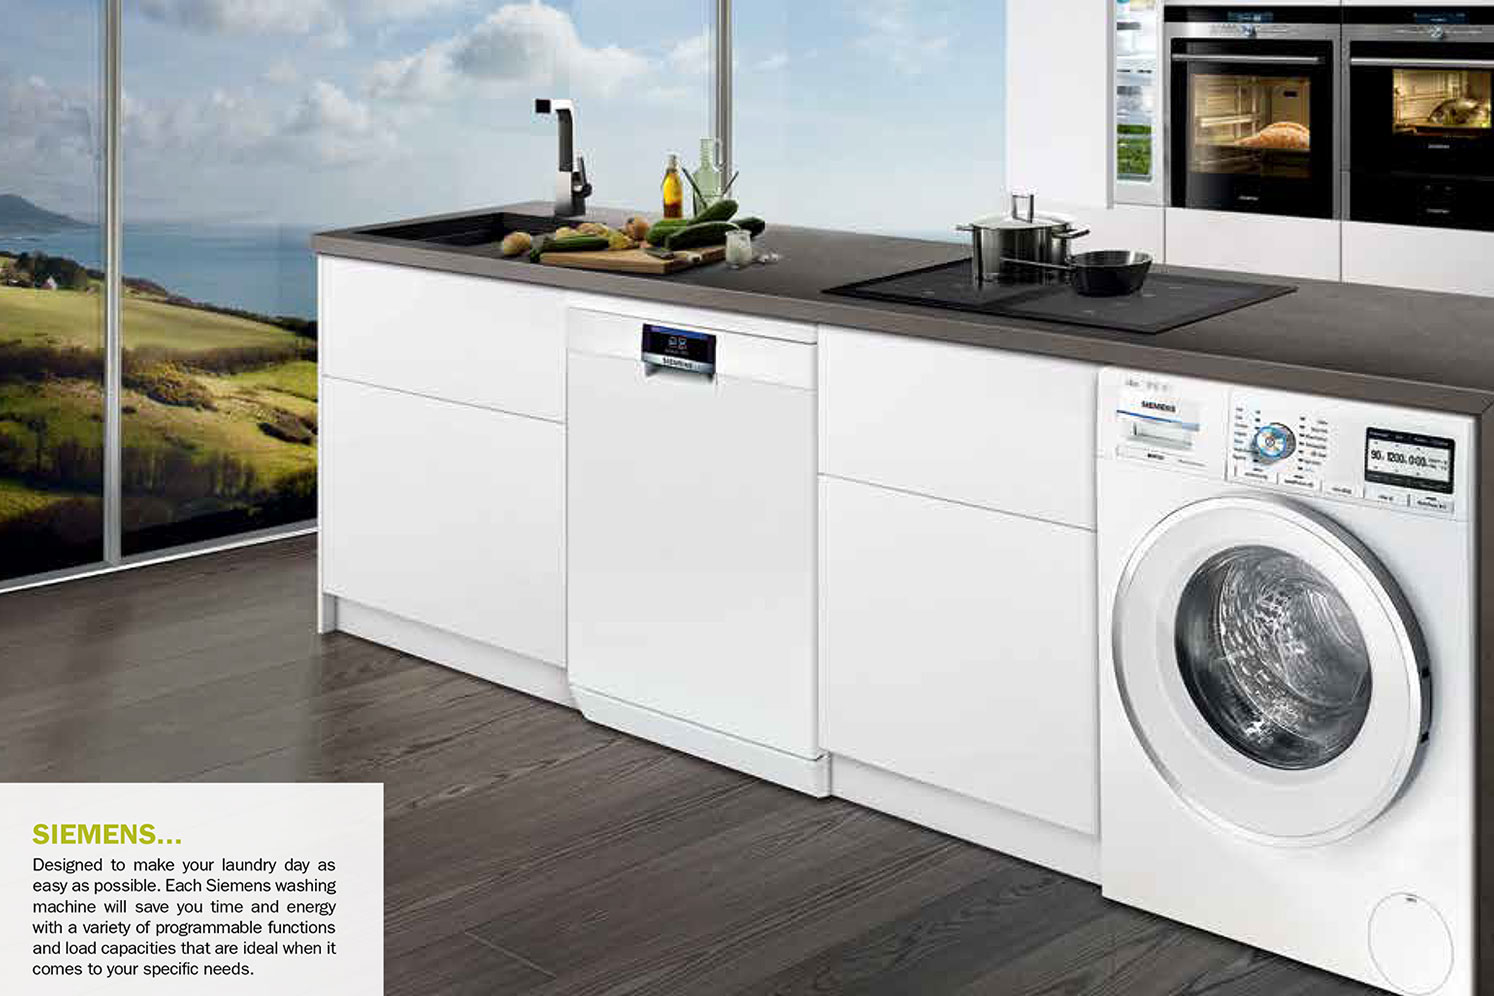 Siemens Washing Machines in Dublin